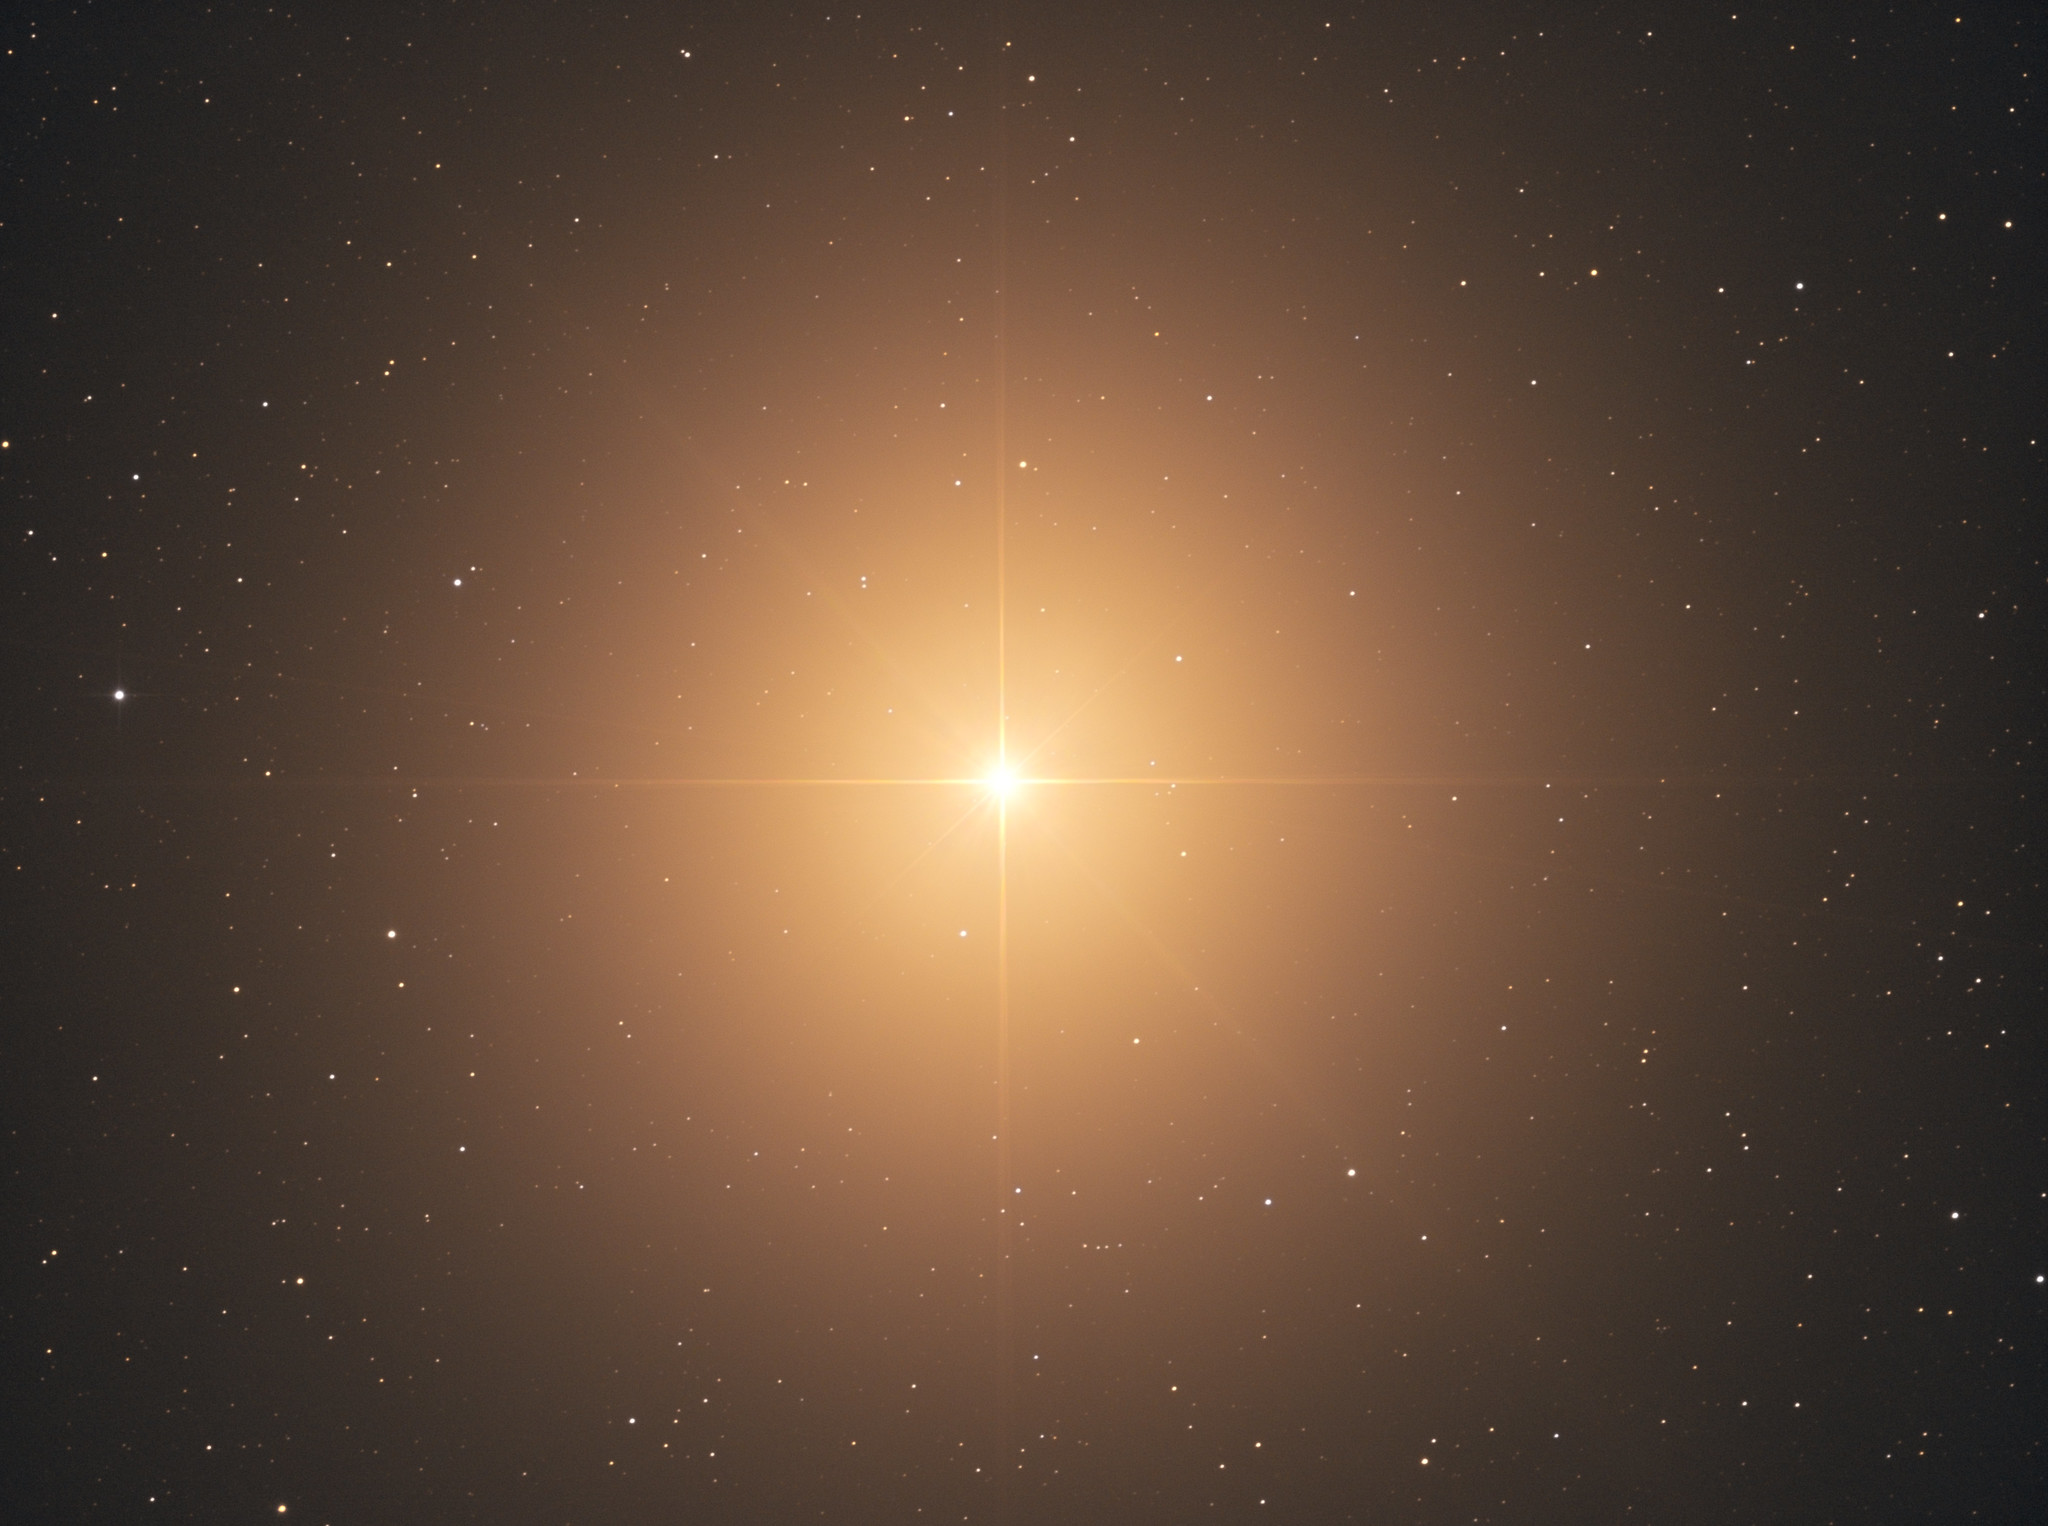 Estrela Betelgeuse explode em 2019